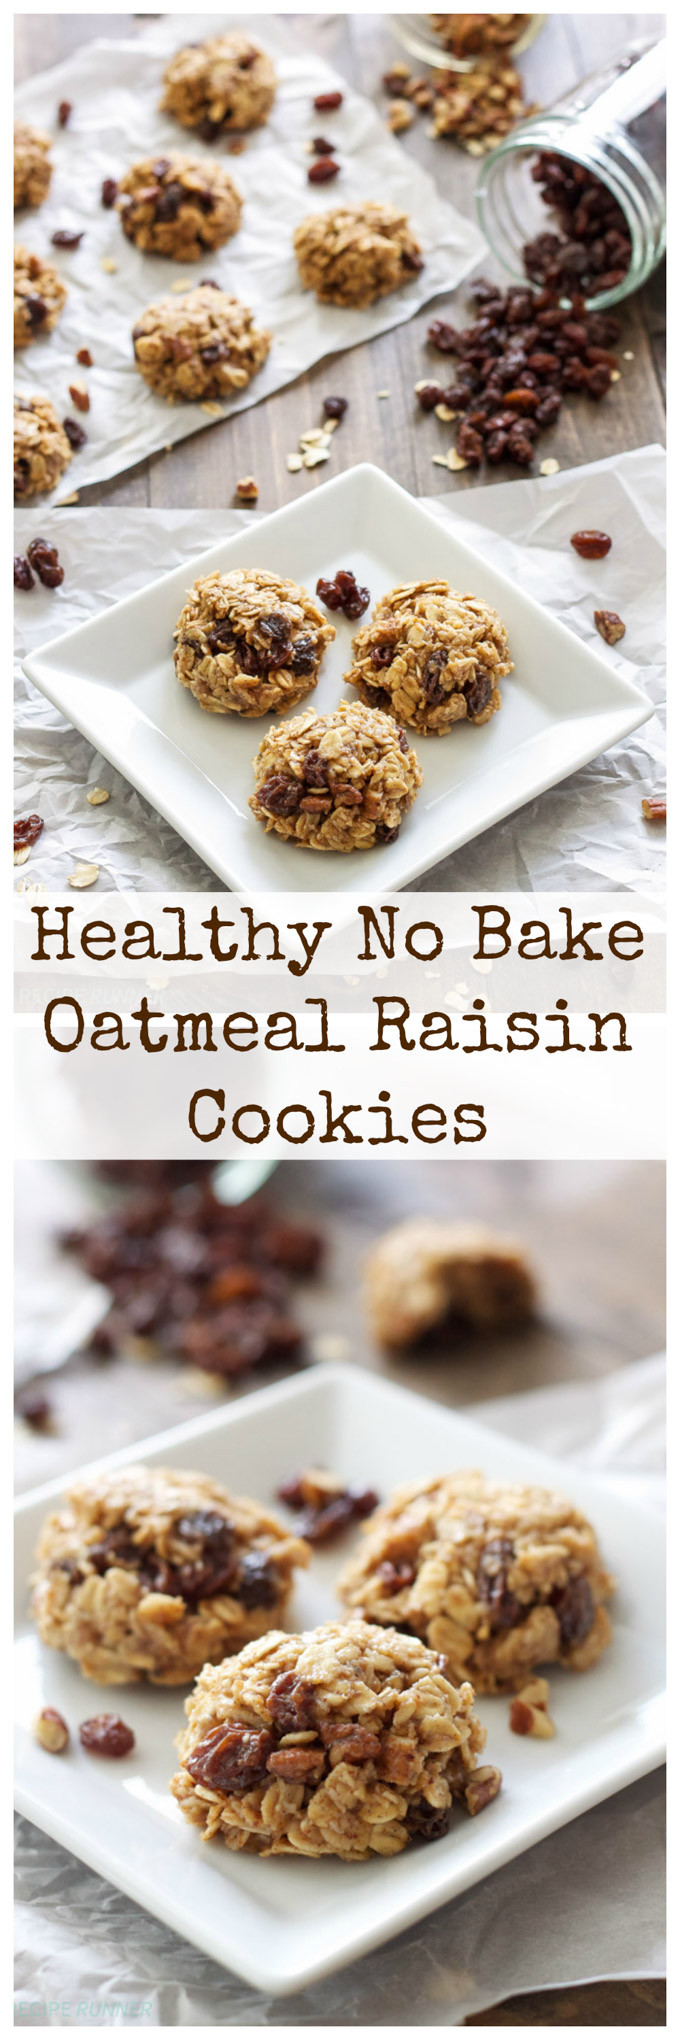 No Bake Oatmeal Cookies Healthy
 Healthy No Bake Oatmeal Raisin Cookies Recipe Runner